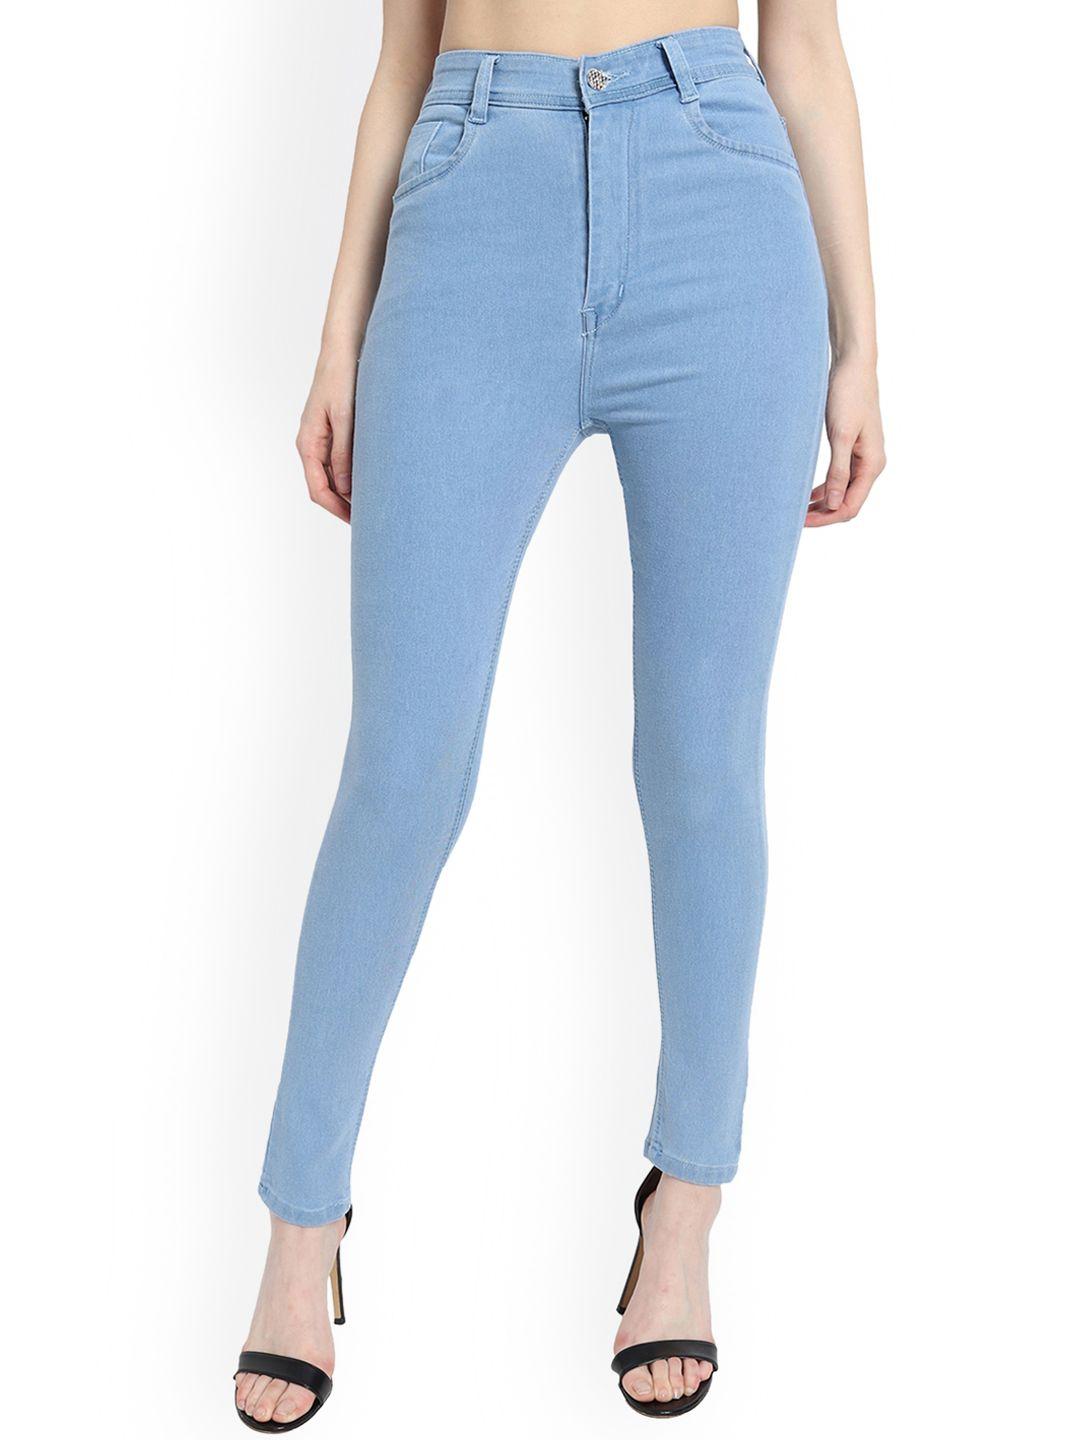 baesd women jean slim fit stretchable denim jeans